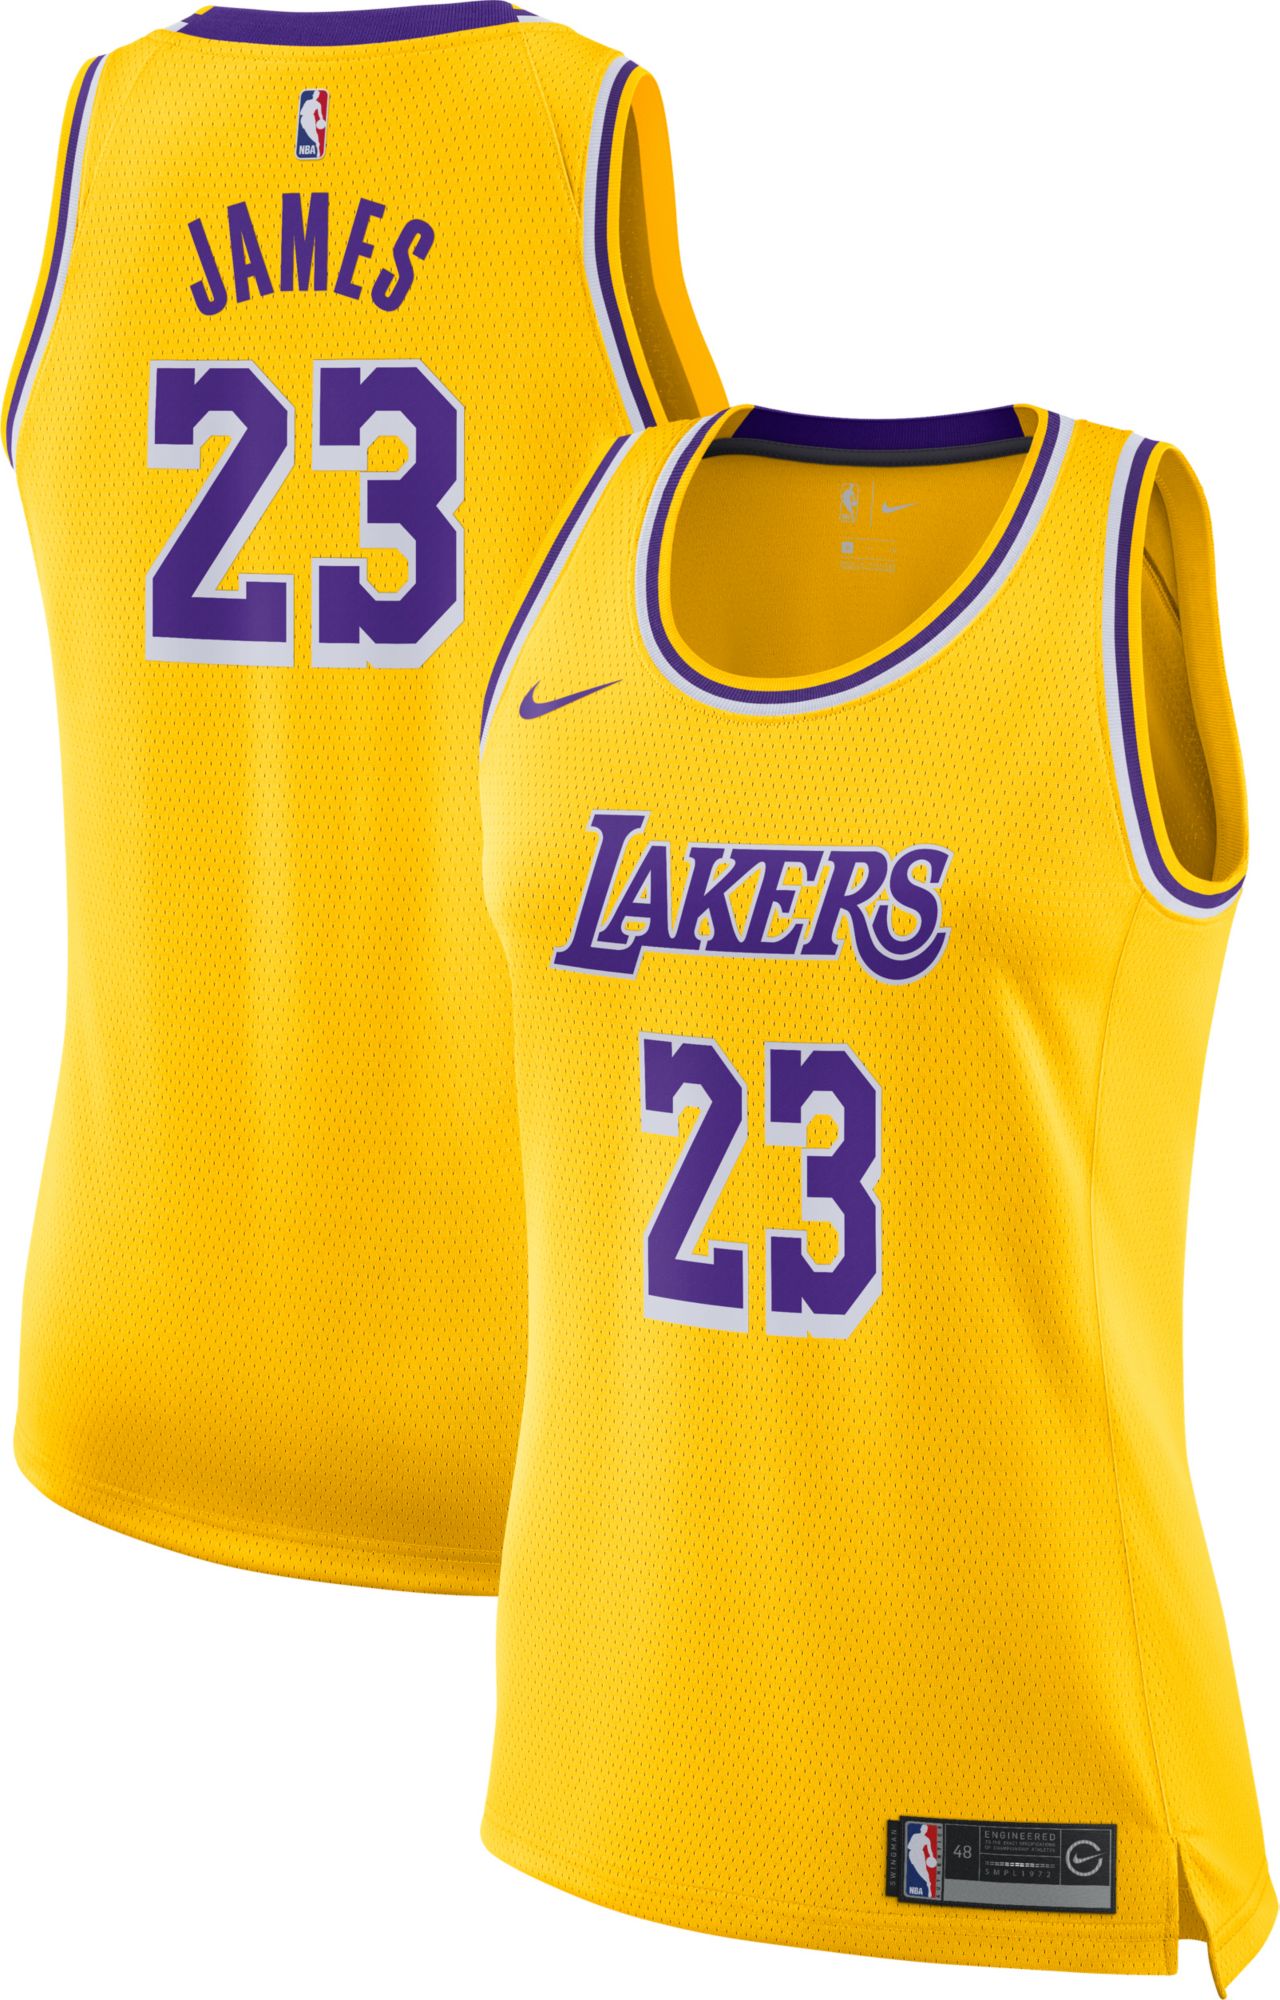 Los Angeles Lakers Women's Apparel 